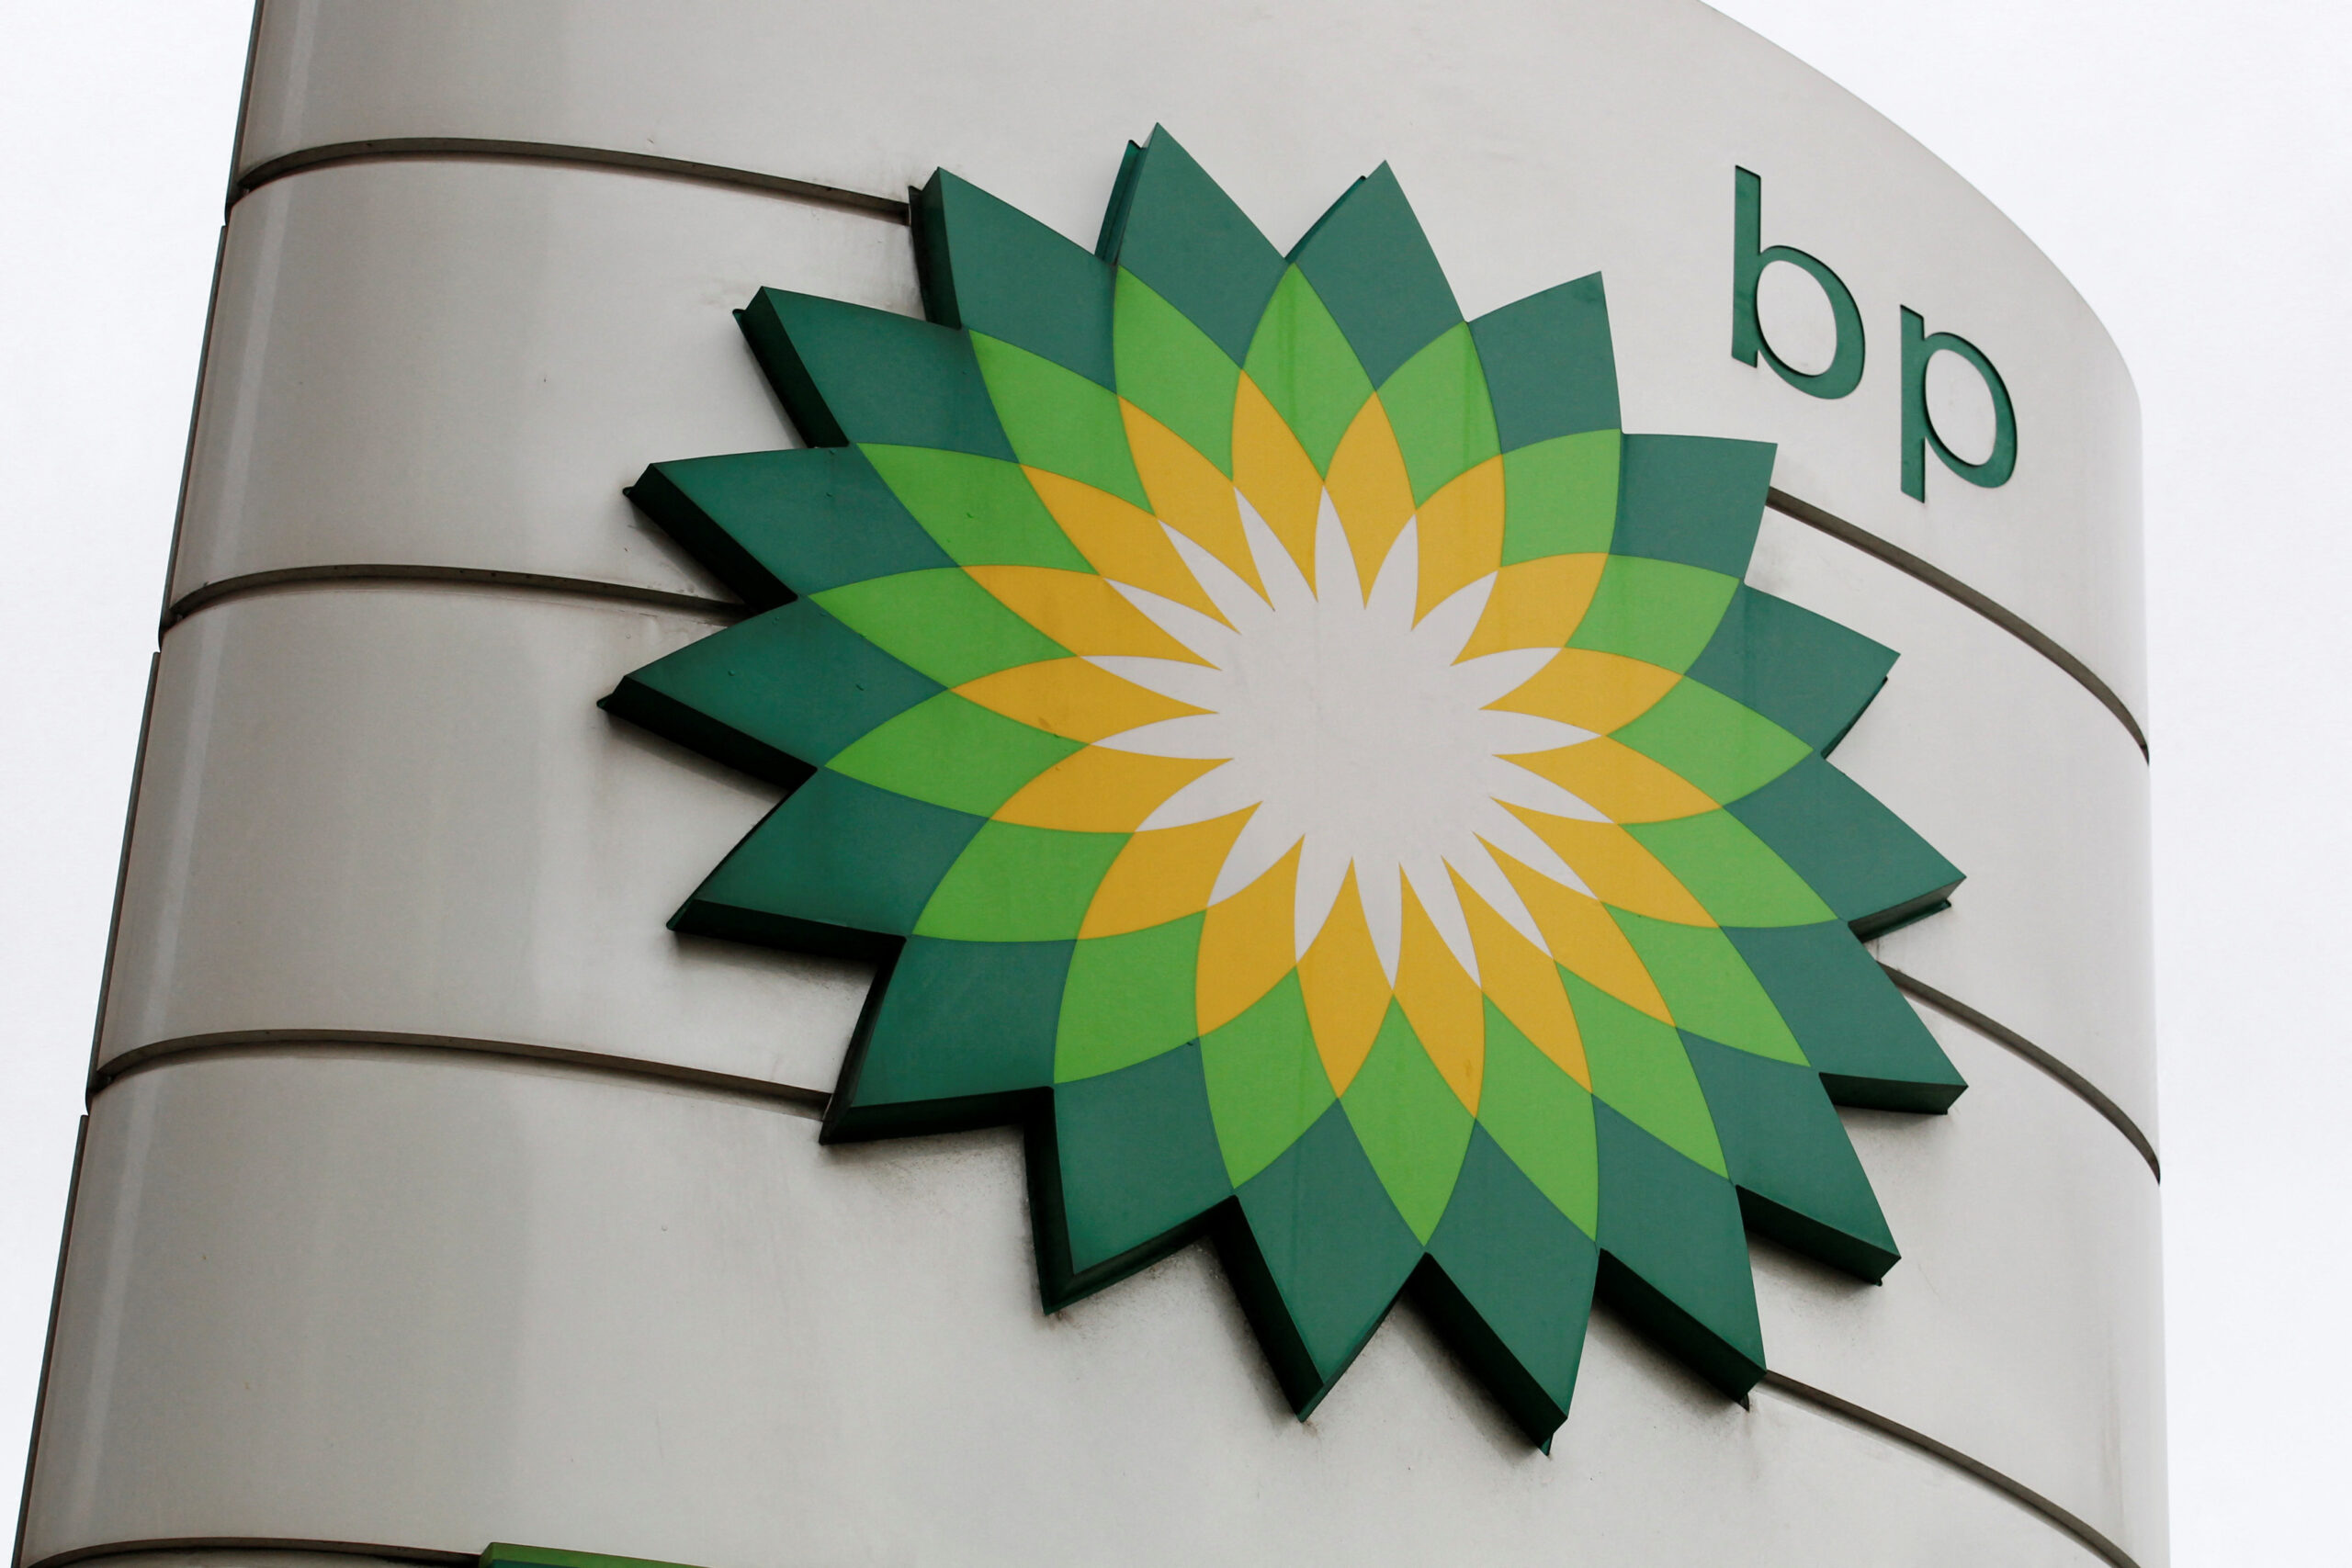 BP assumirá controle de joint venture de biocombustíveis com a Bunge no Brasil